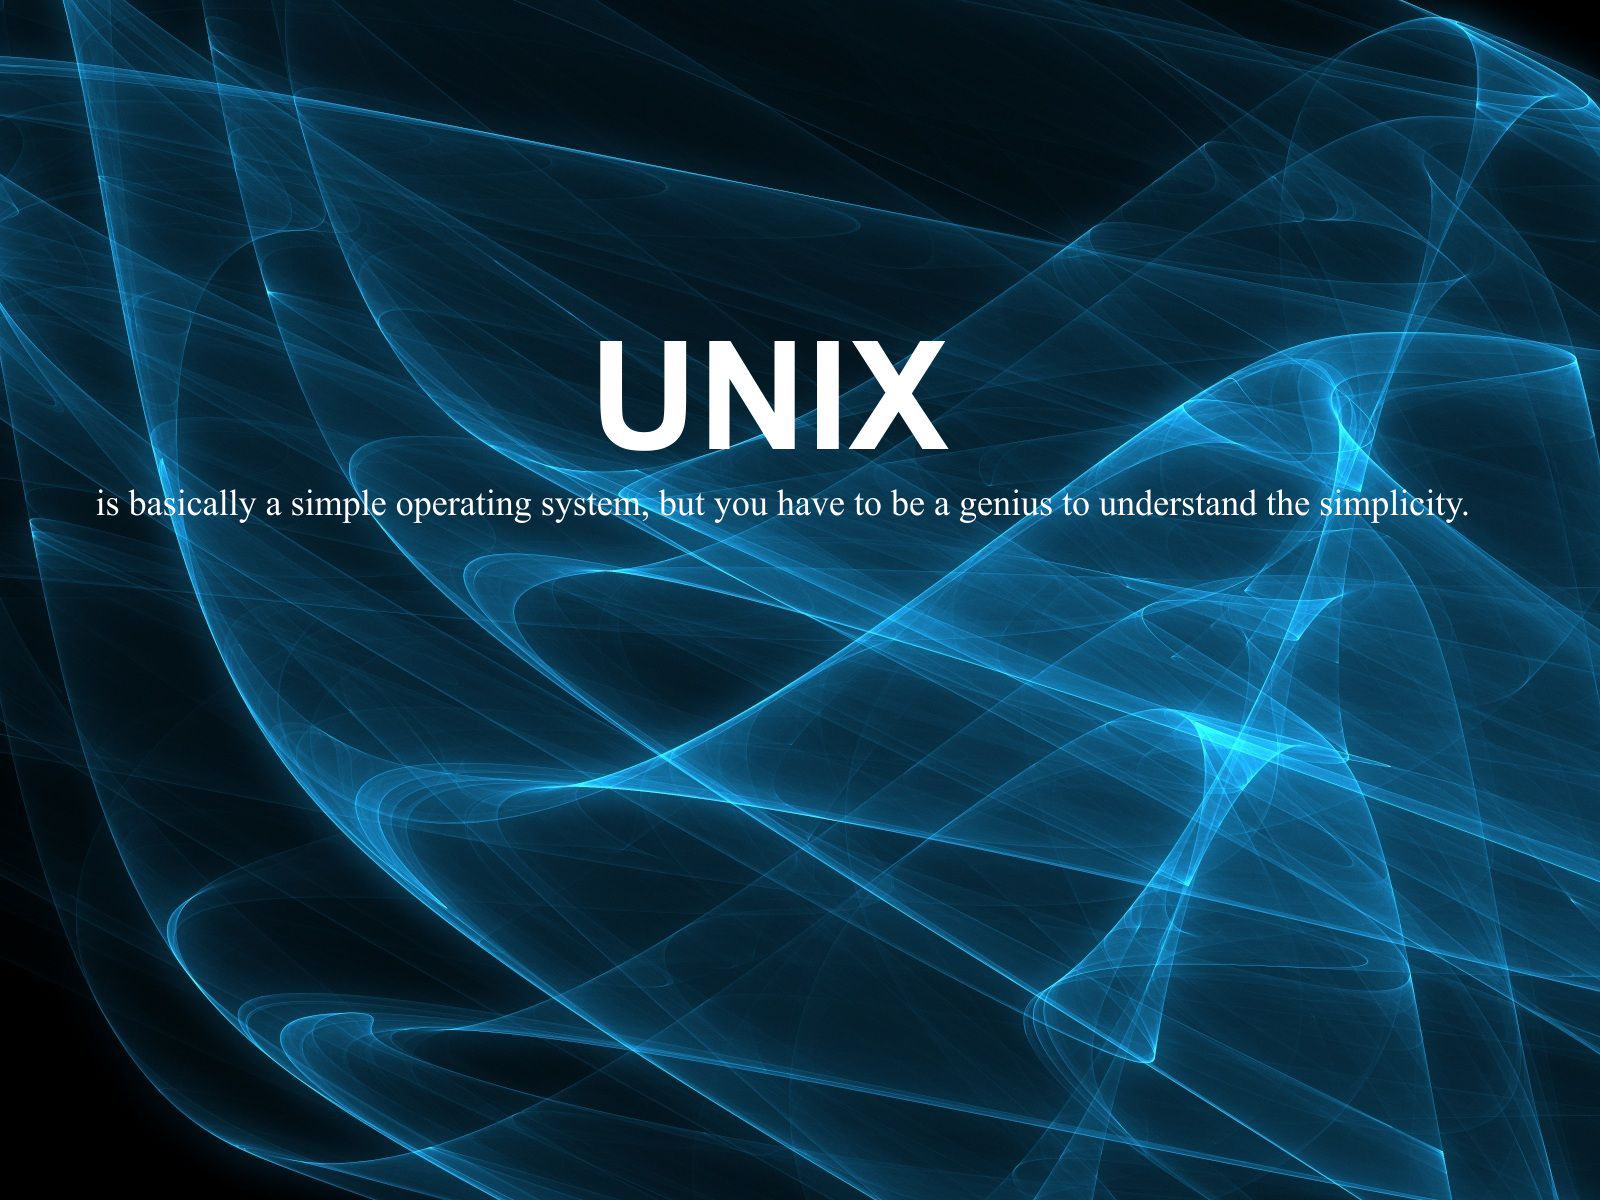 Unix is Simple